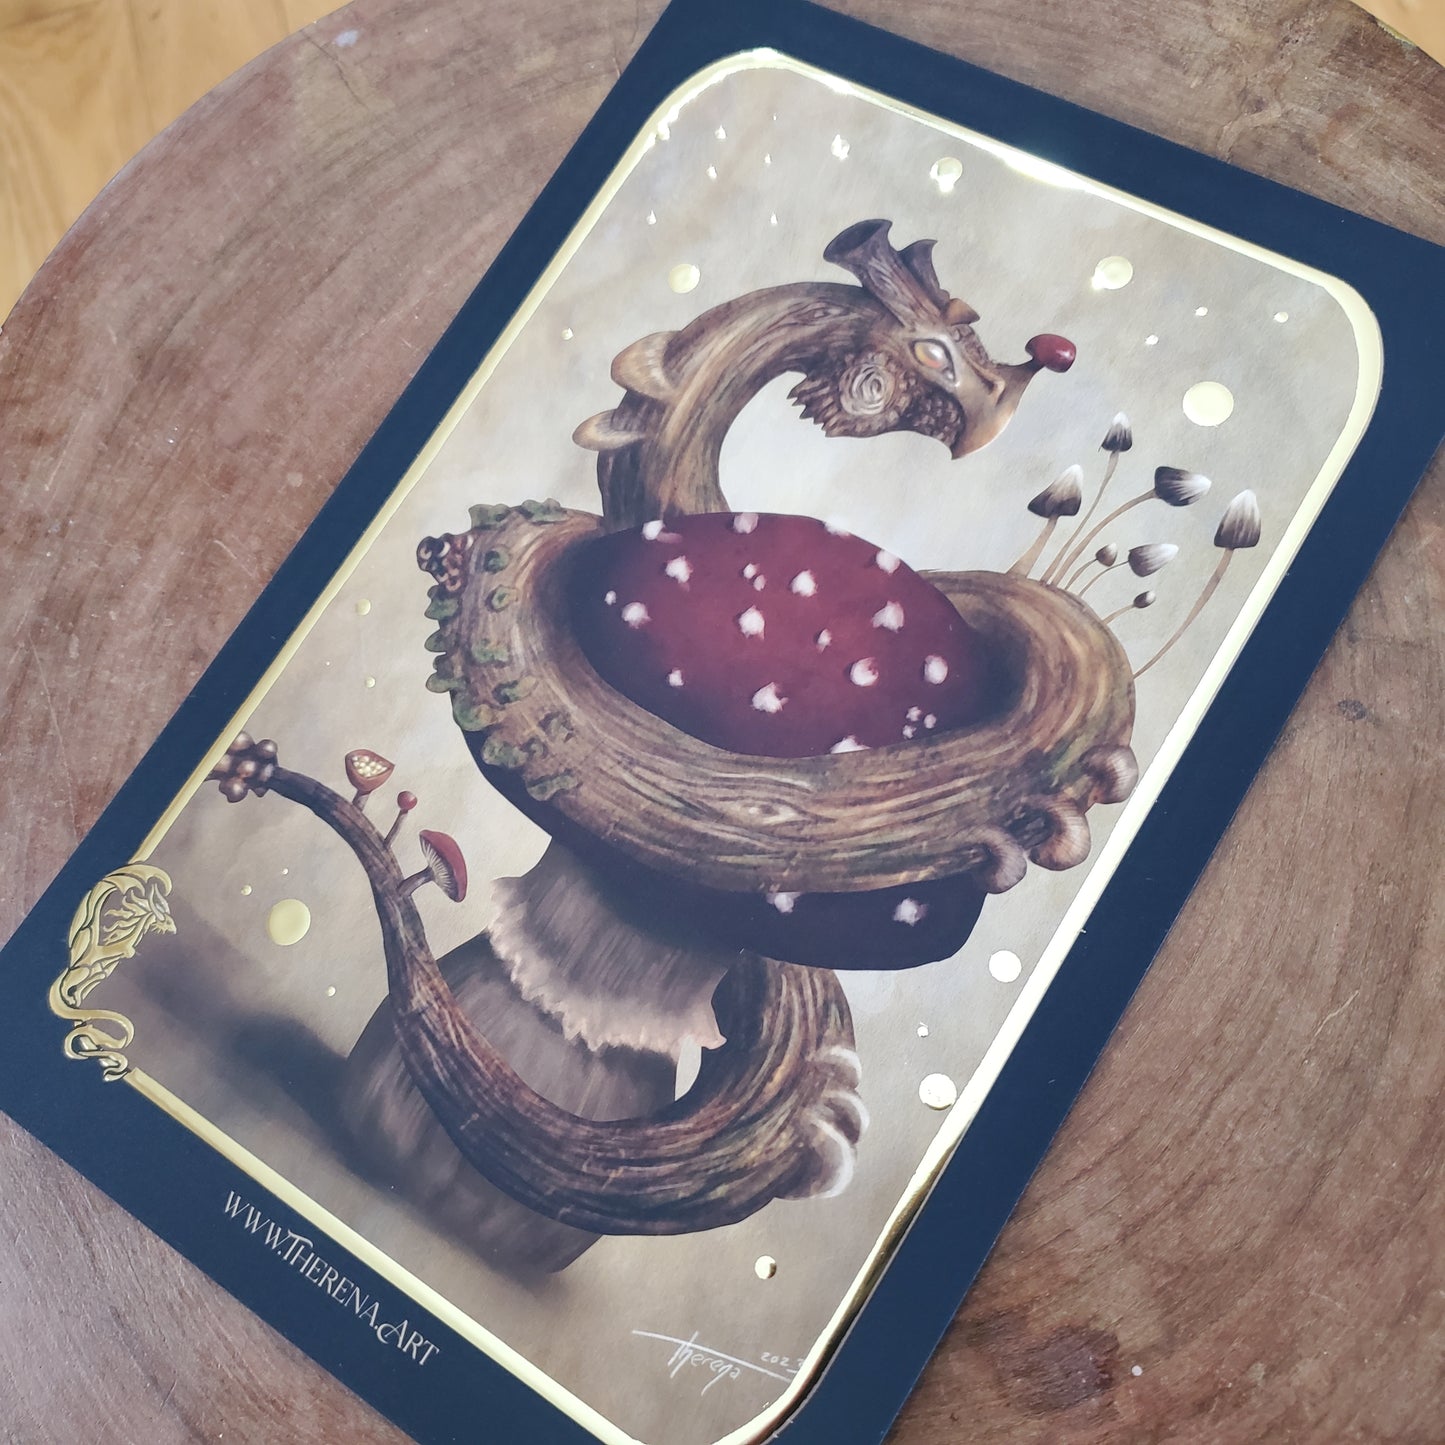 Gold Foil Mushroom Dragon Print (limited edition/signed)